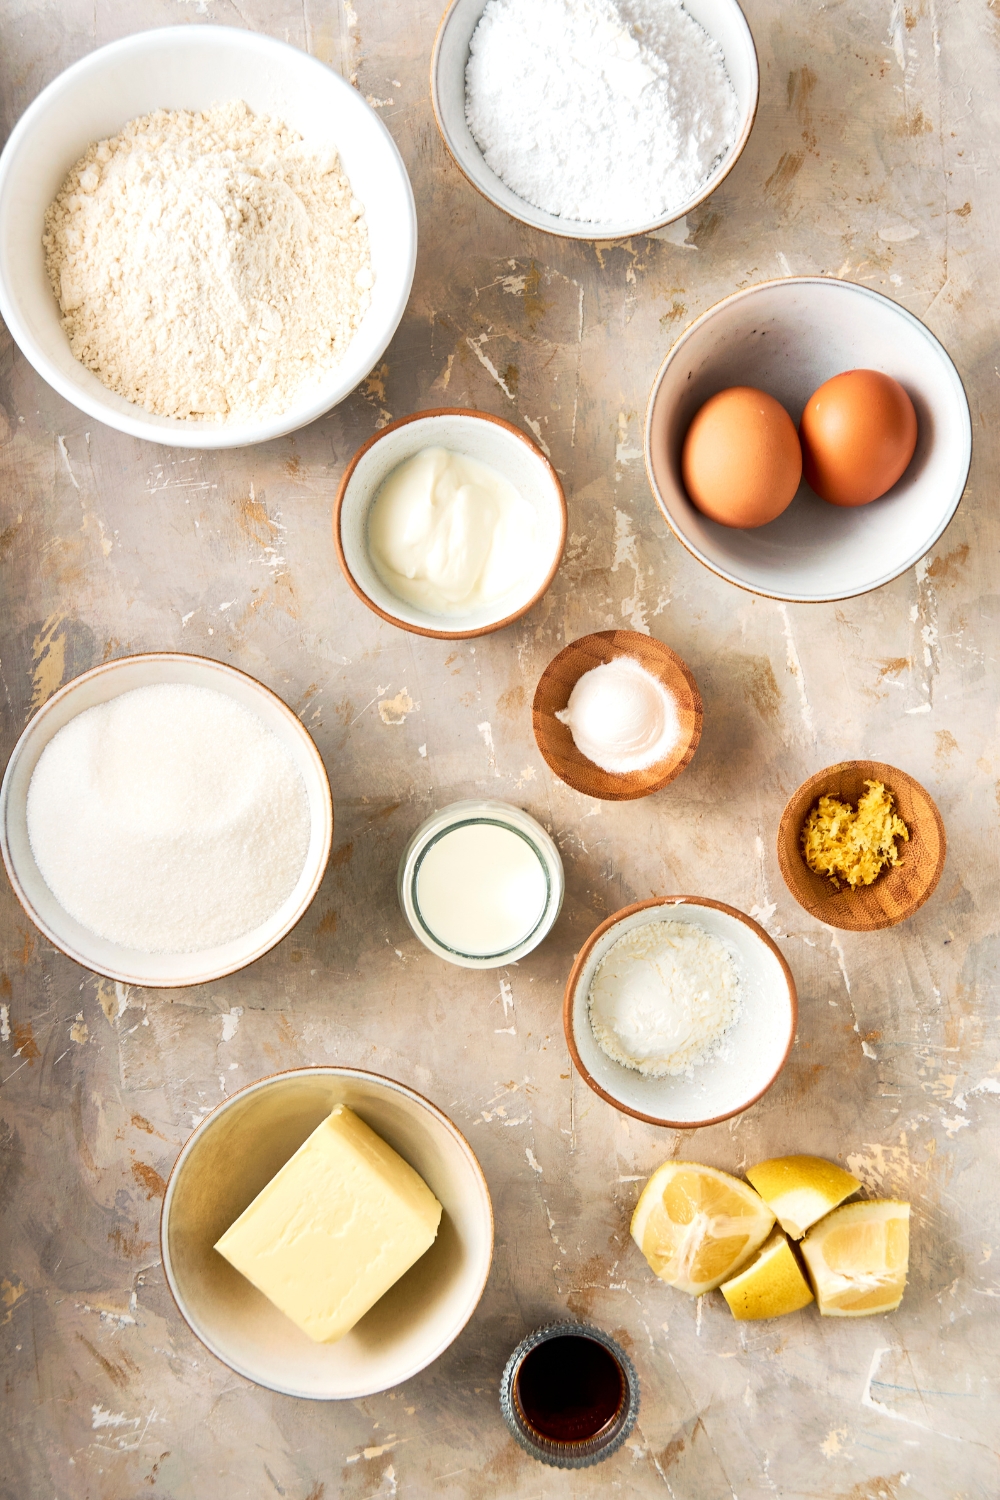 A countertop with multiple bowls with ingredients like flour, sugar, butter, greek yogurt, eggs, lemon zest, baking powder, salt, milk, vanilla, and sliced lemons.